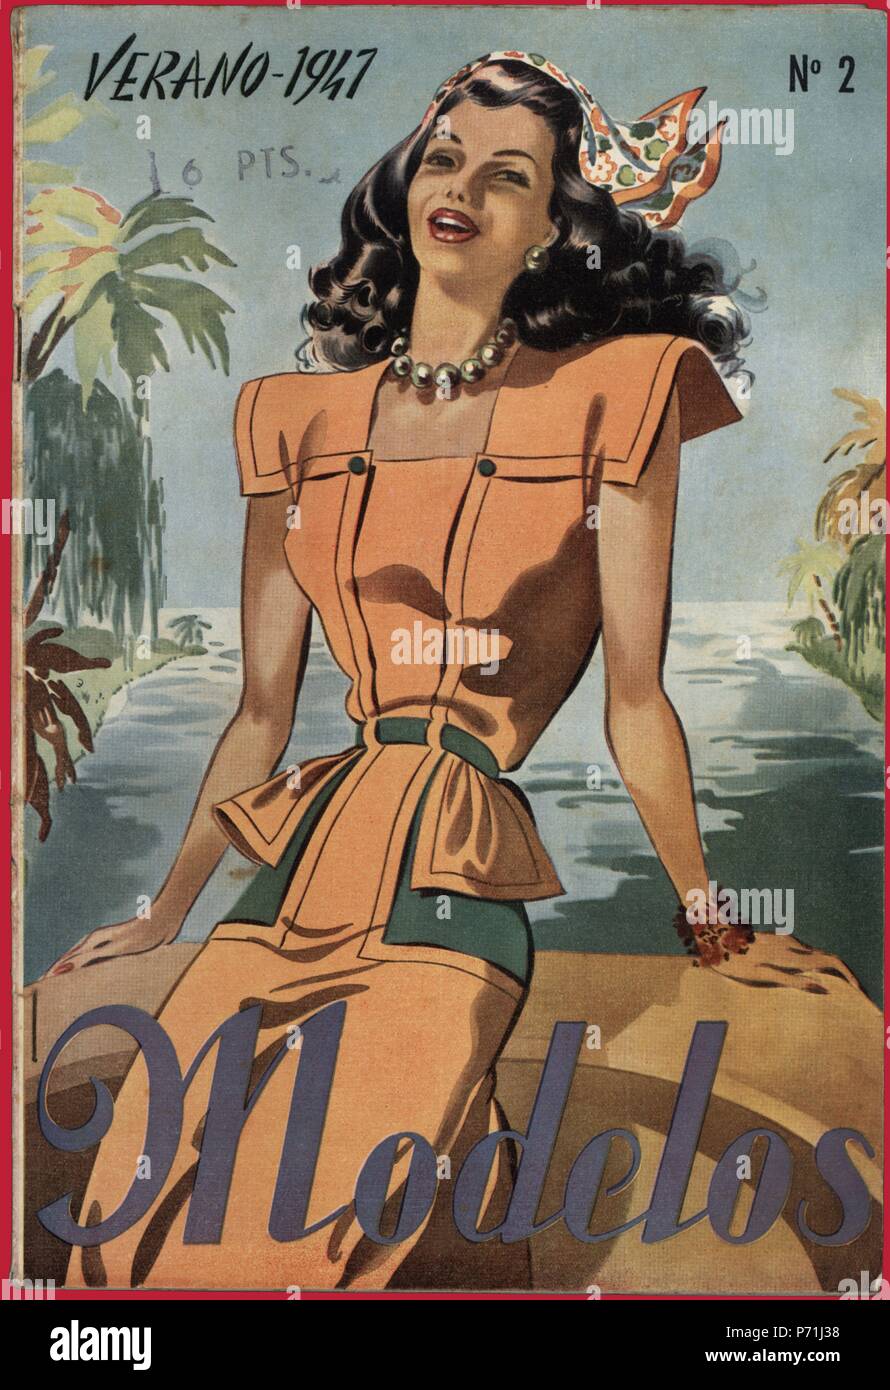 Portada de la revista de moda femenina Modelos, verano de 1947 Stock Photo  - Alamy